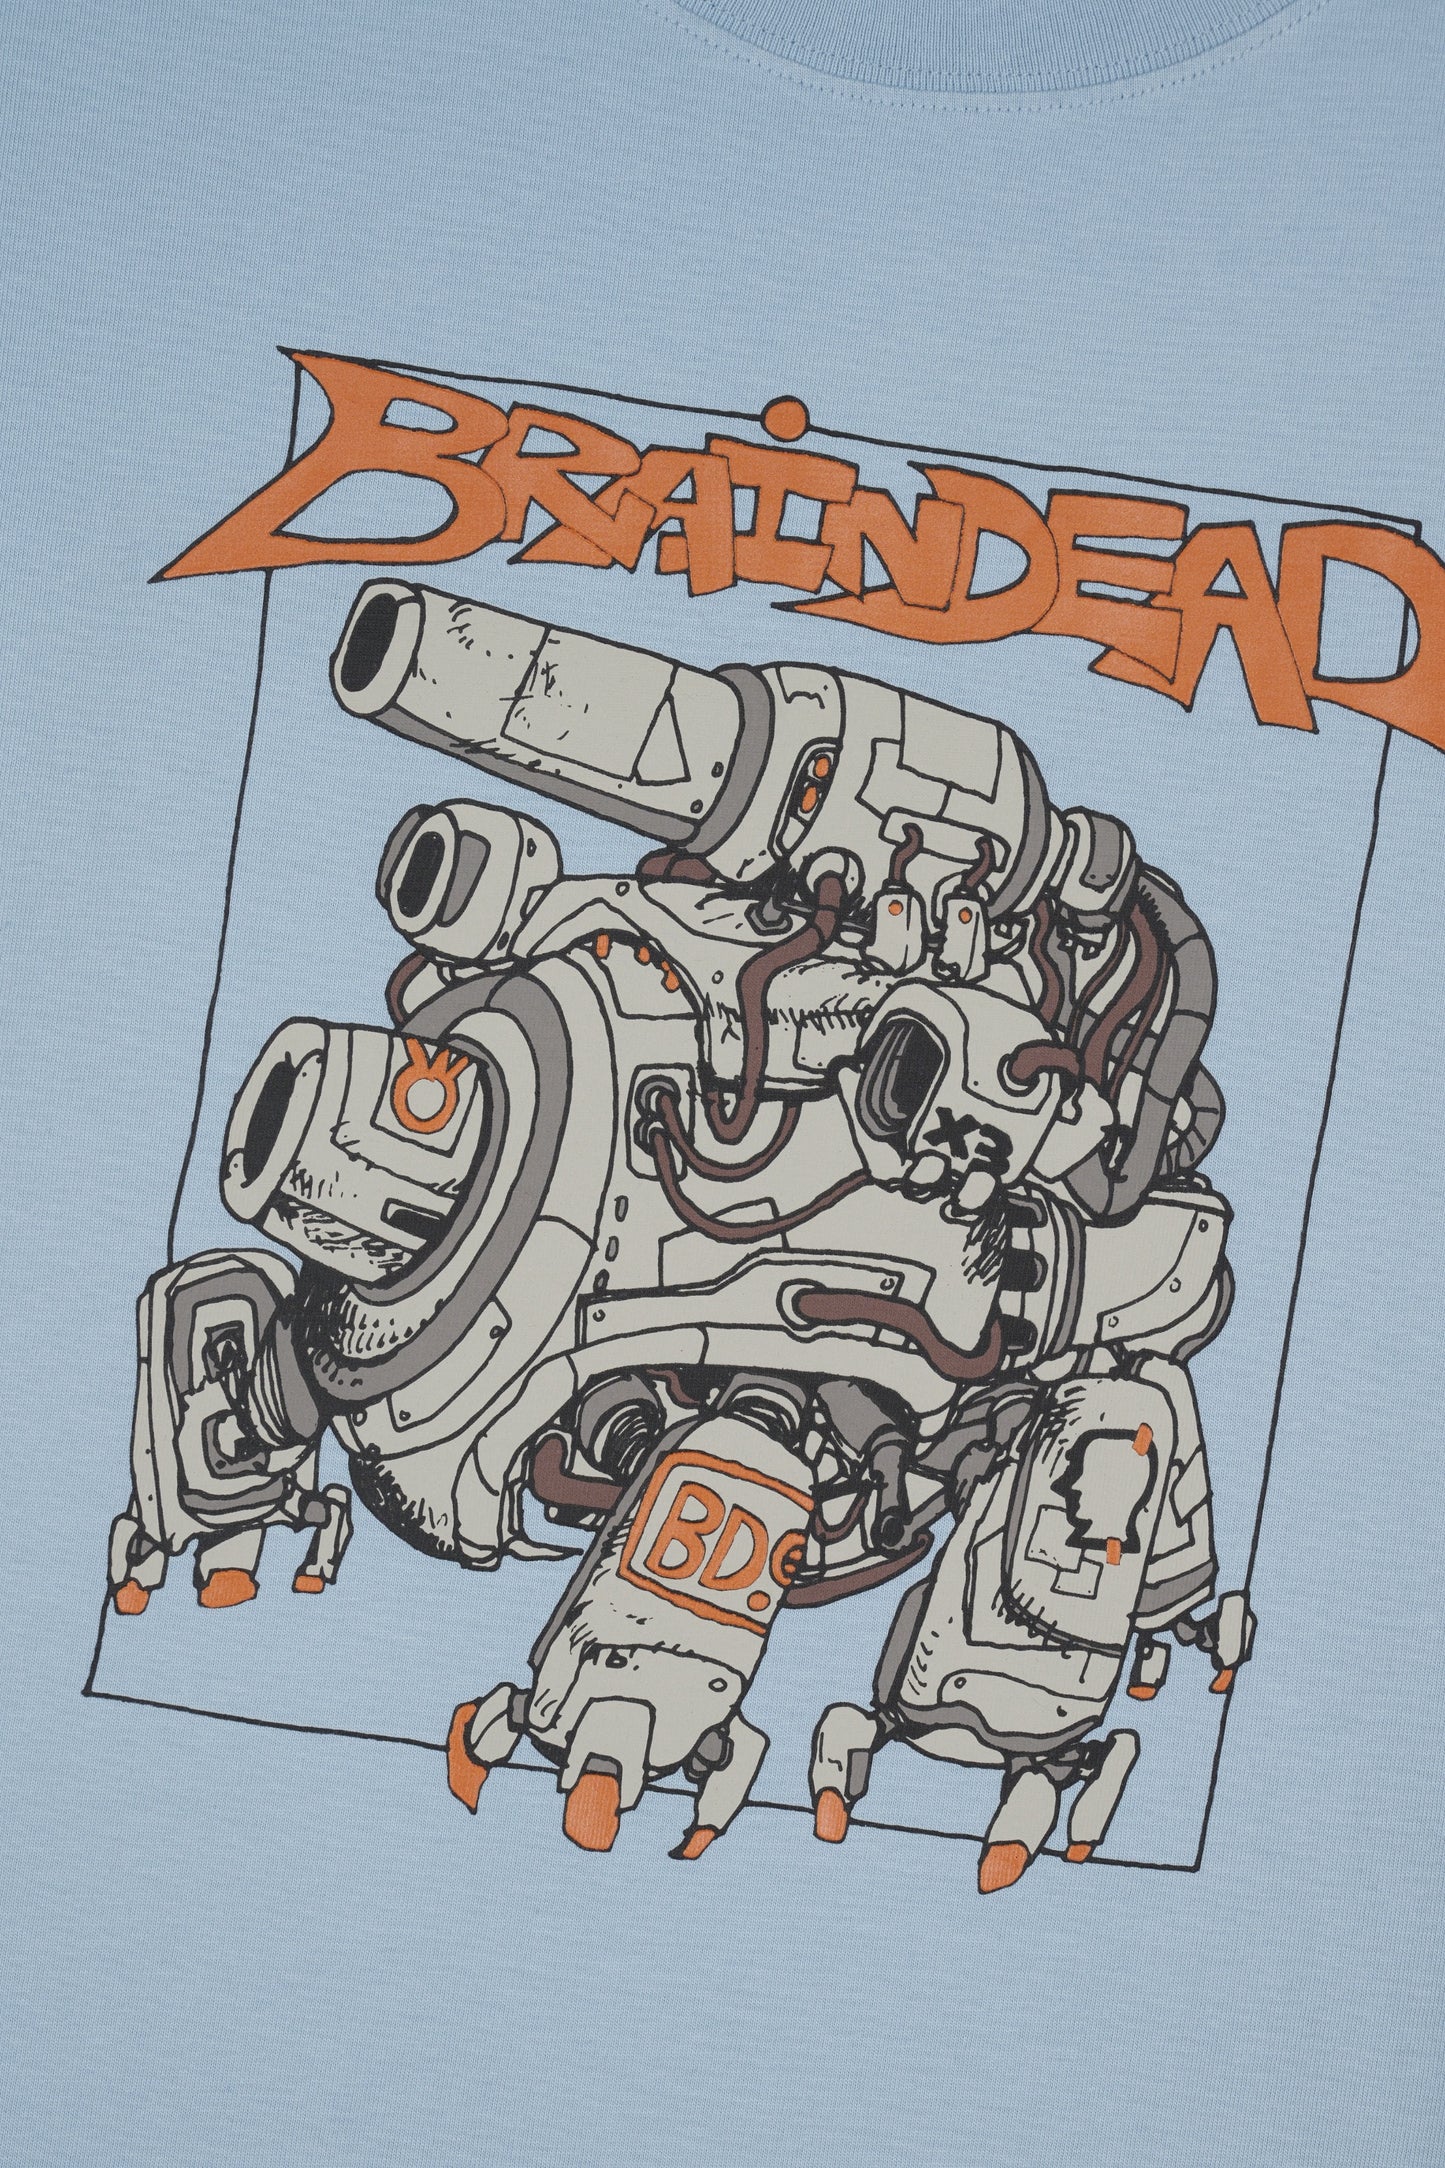 Brain Dead - Mech Tank T-Shirt (Slate)